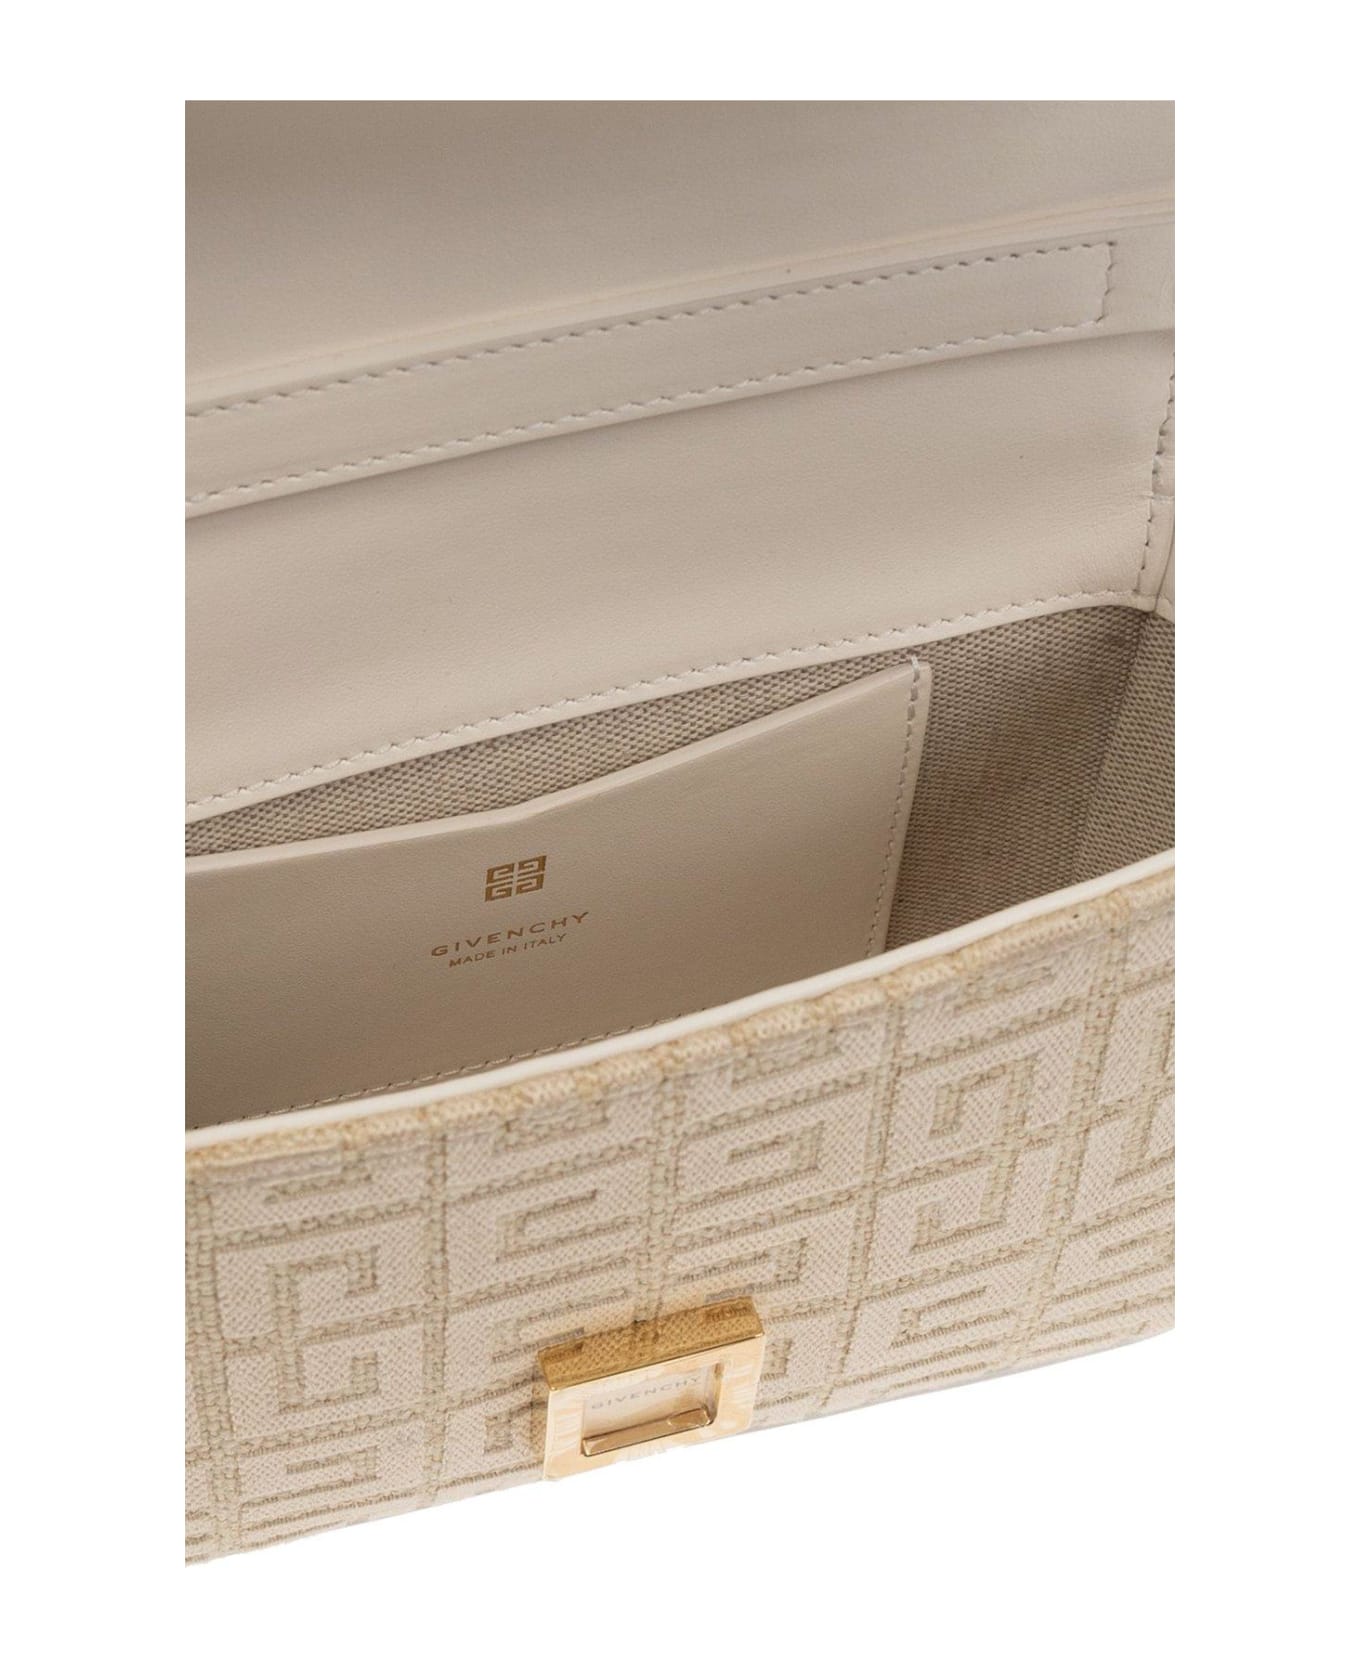 Givenchy 4g Small Shoulder Bag - White